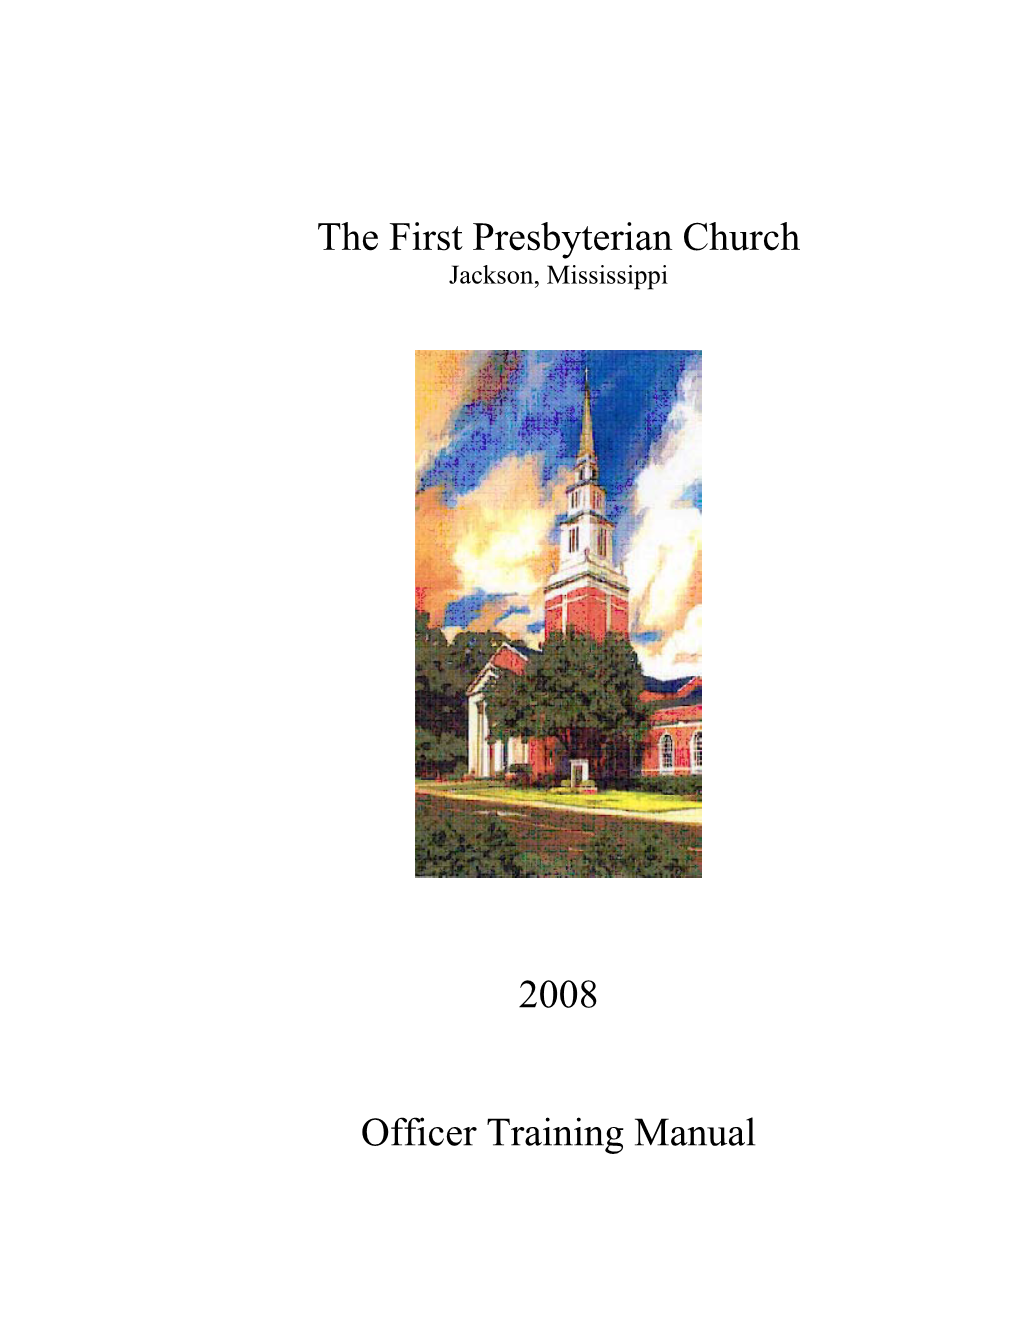 The First Presbyterian Church 2008 Officer Training Manual